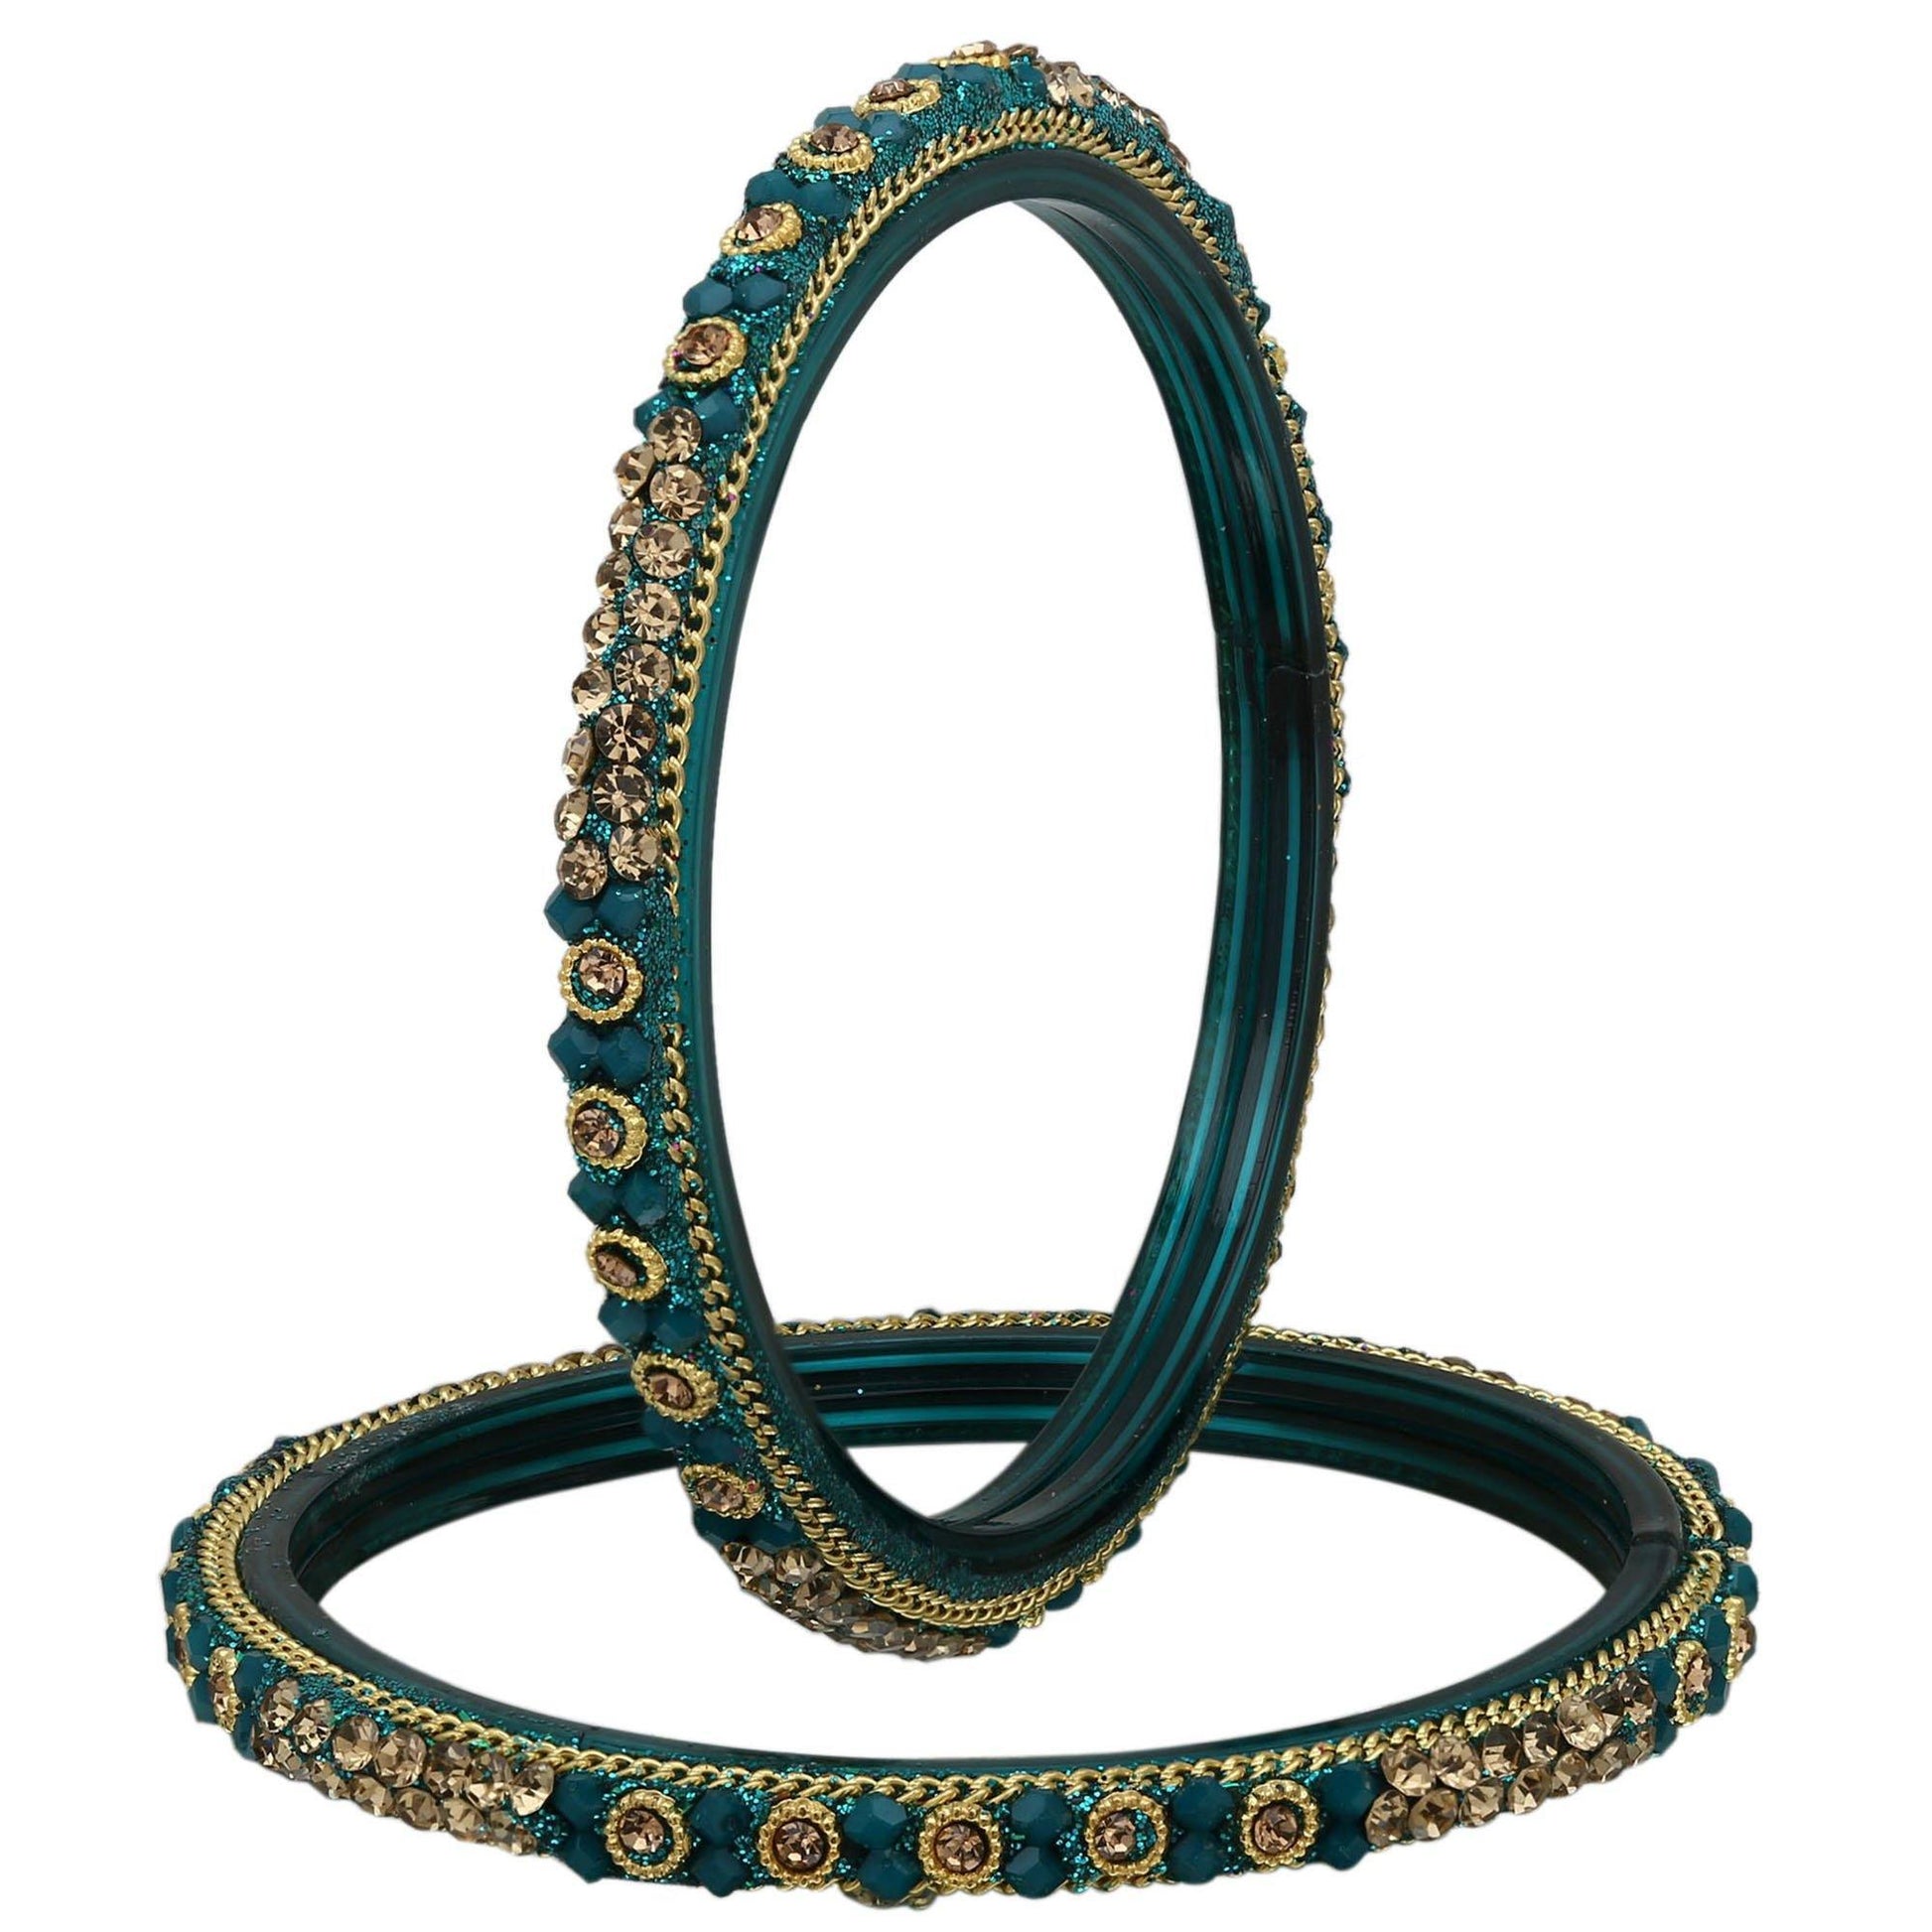 sukriti handcrafted glossy zircon crystal glass bangles for women – set of 4